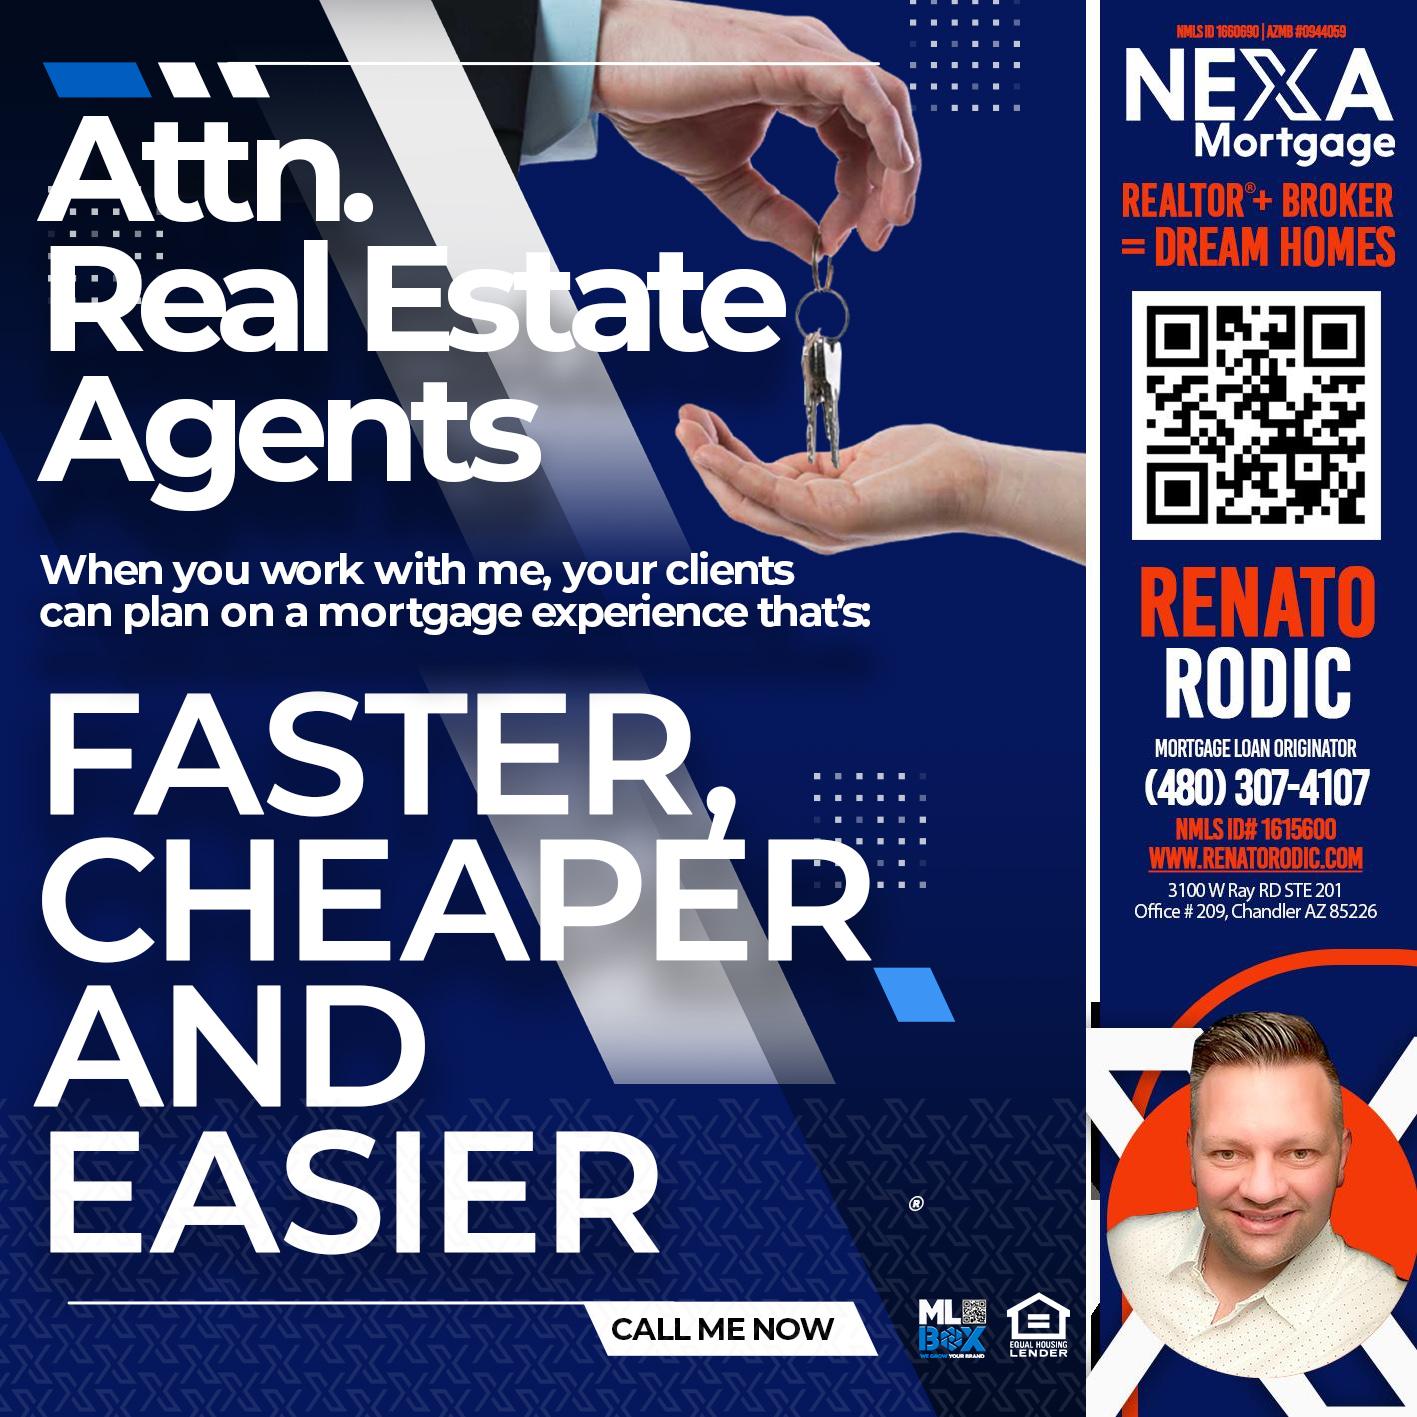 ATTN REALTORS - Renato Rodic -Mortgage Loan Originator